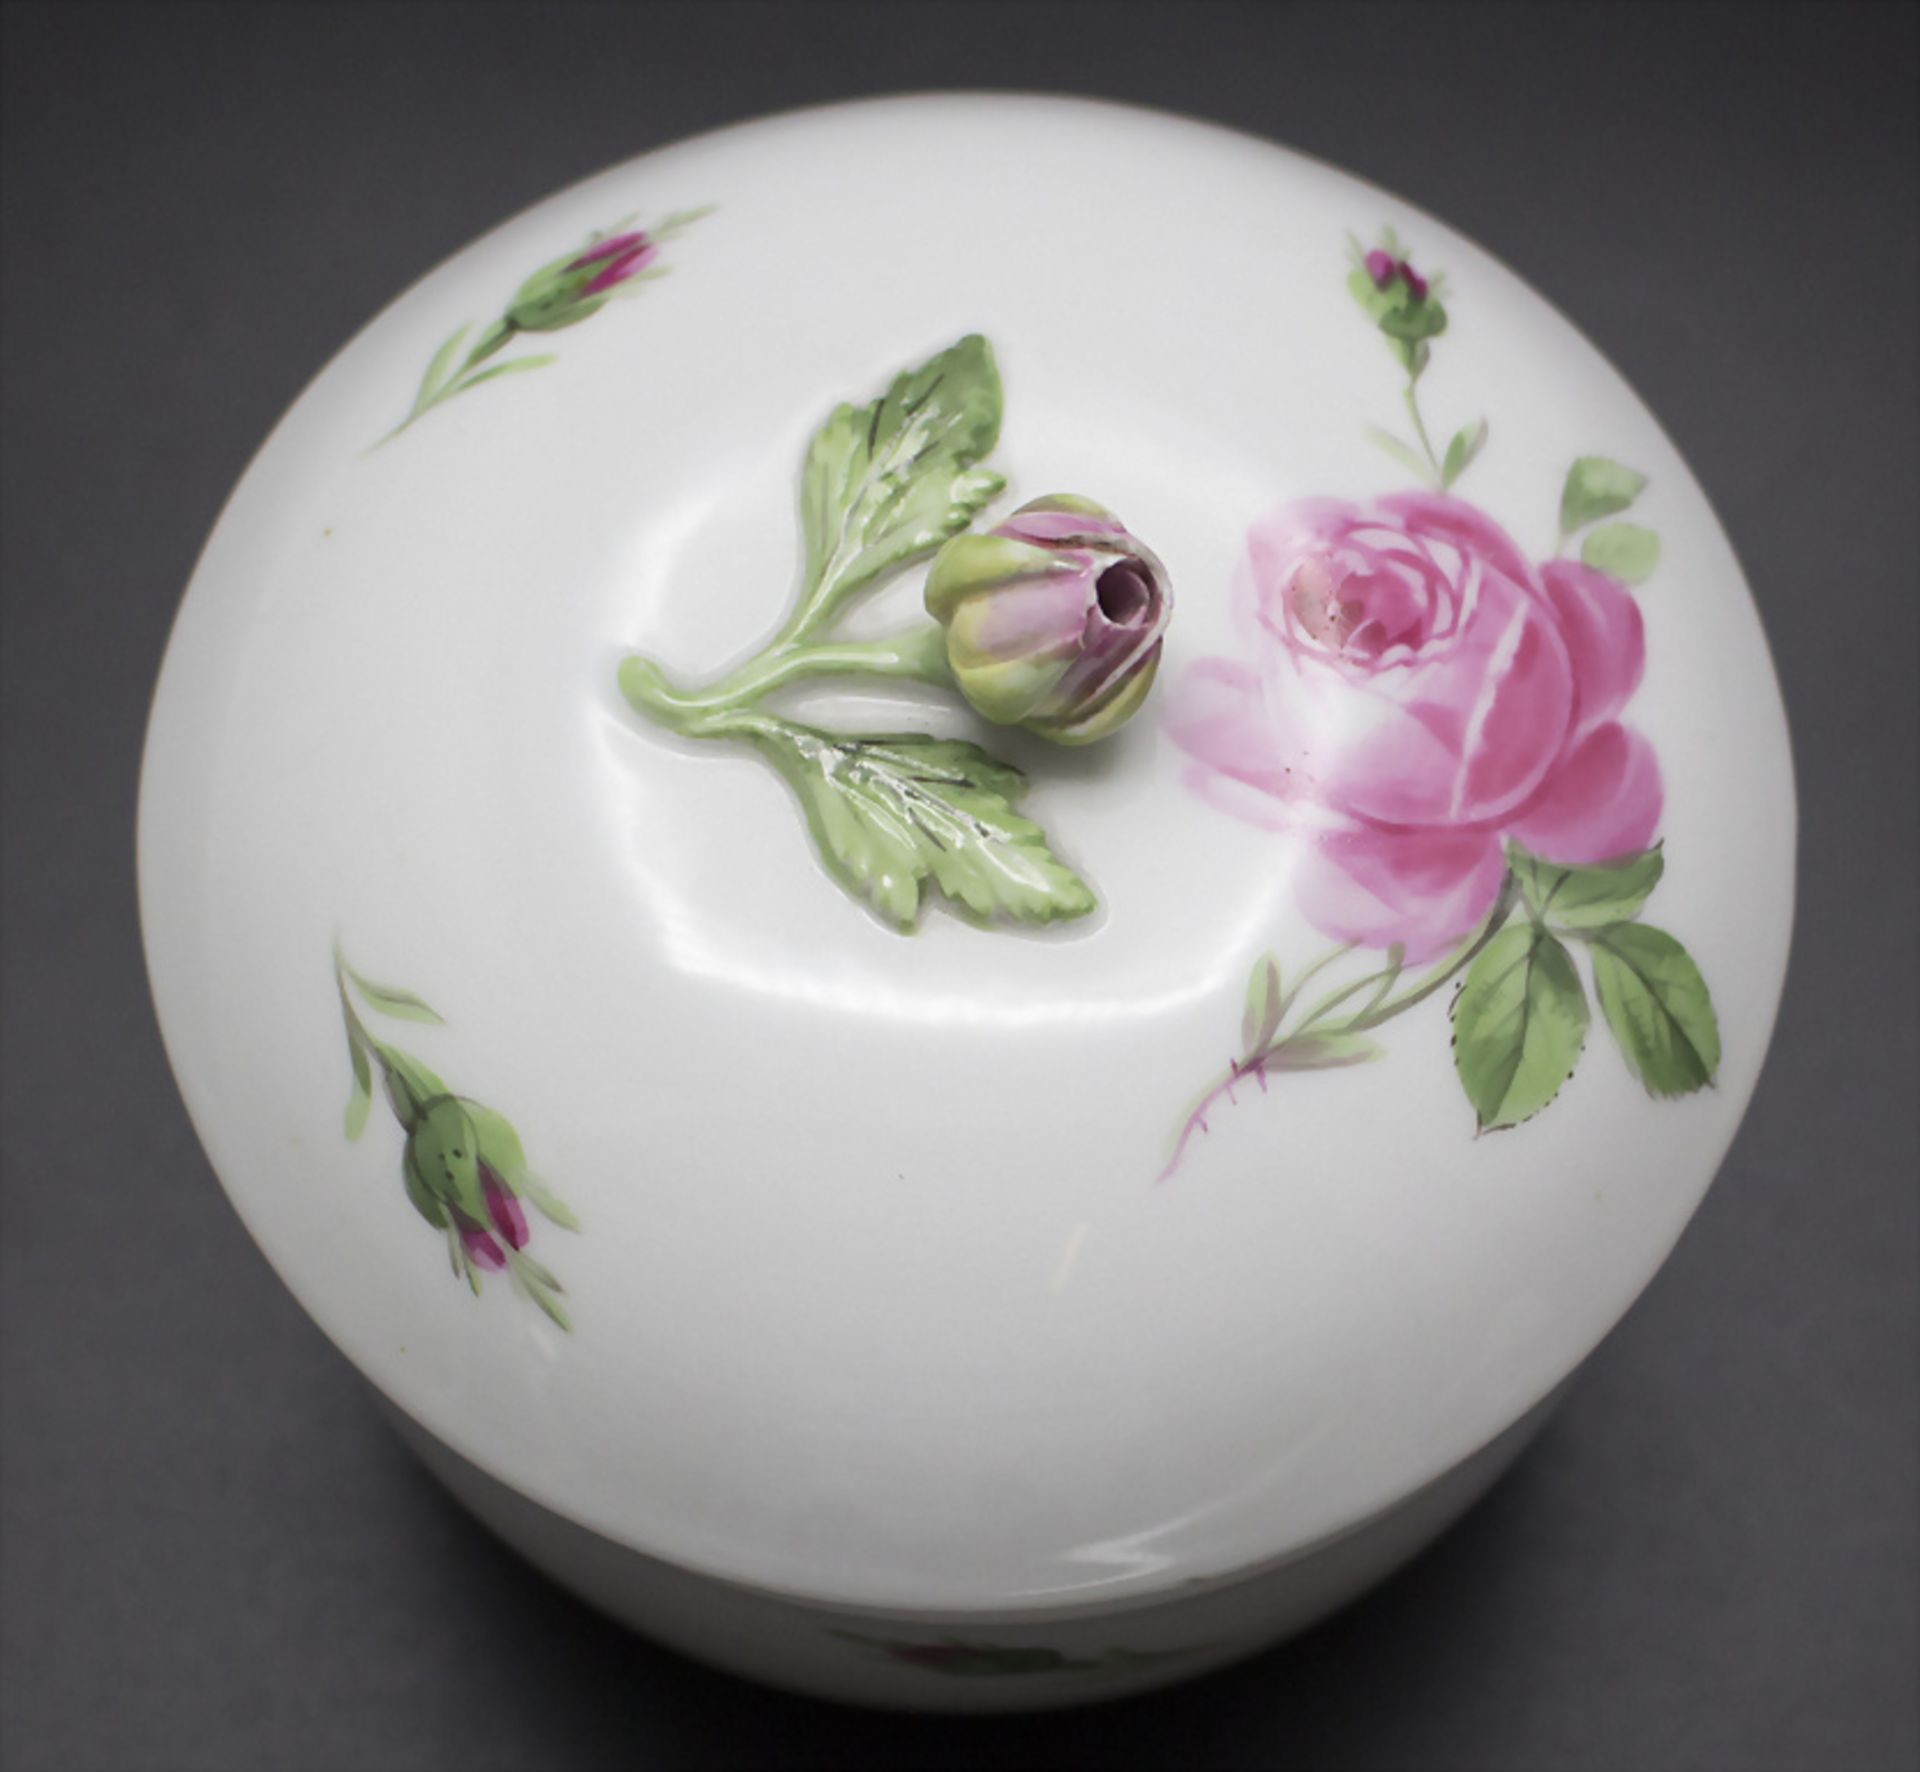 Zuckerdose 'Rote Rose' / A lidded sugar bowl with roses, Meissen, 2. Hälfte 19. Jh. - Bild 4 aus 5